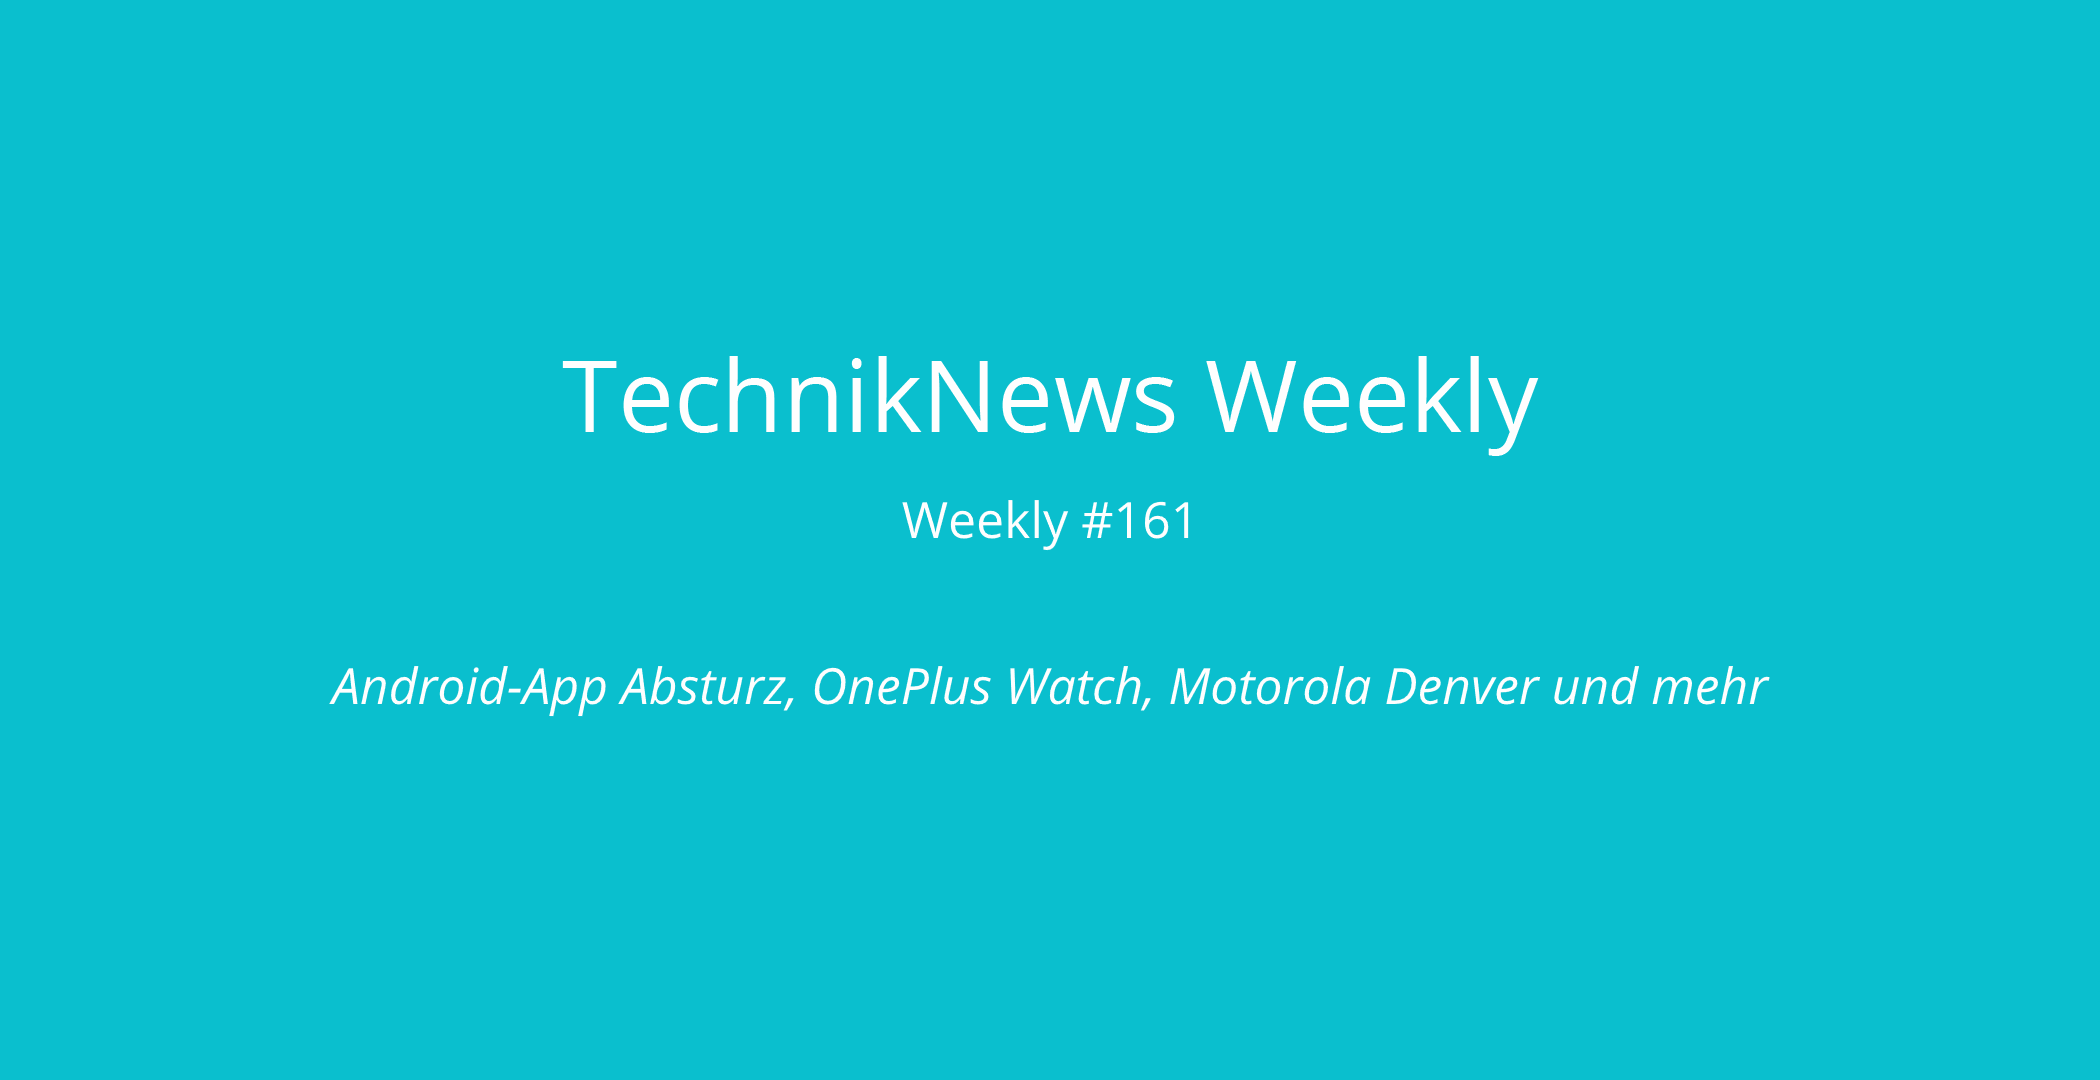 TechnikNews Weekly #161